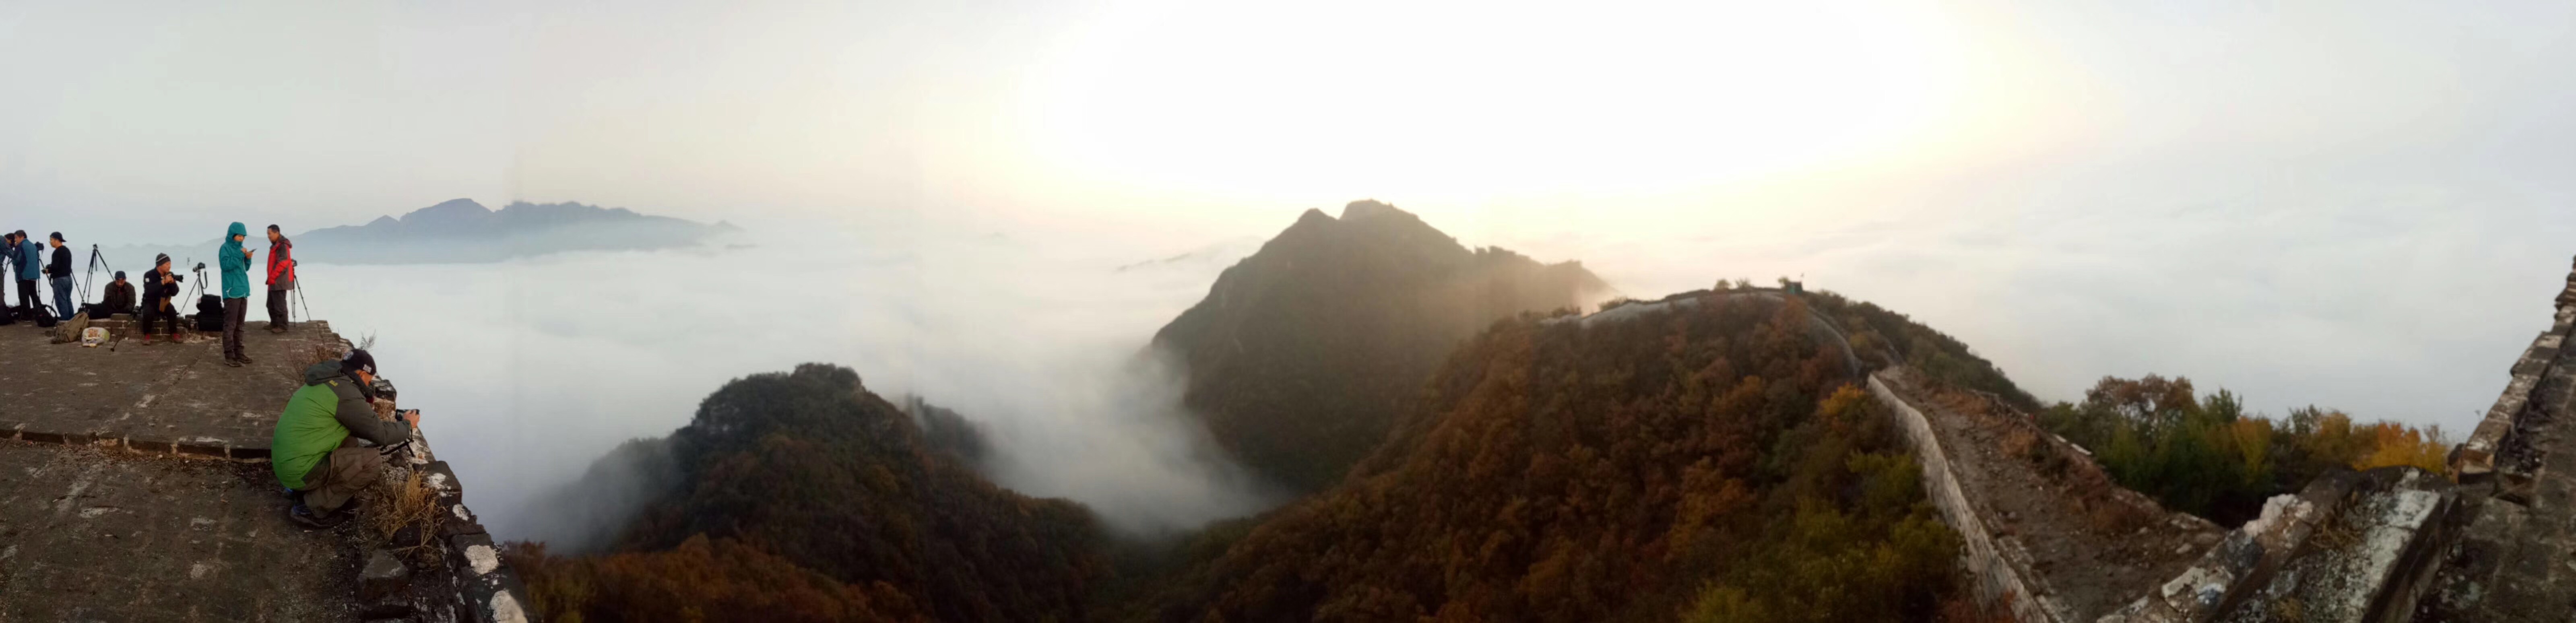 Jinshanling Great Wall Hike Tour